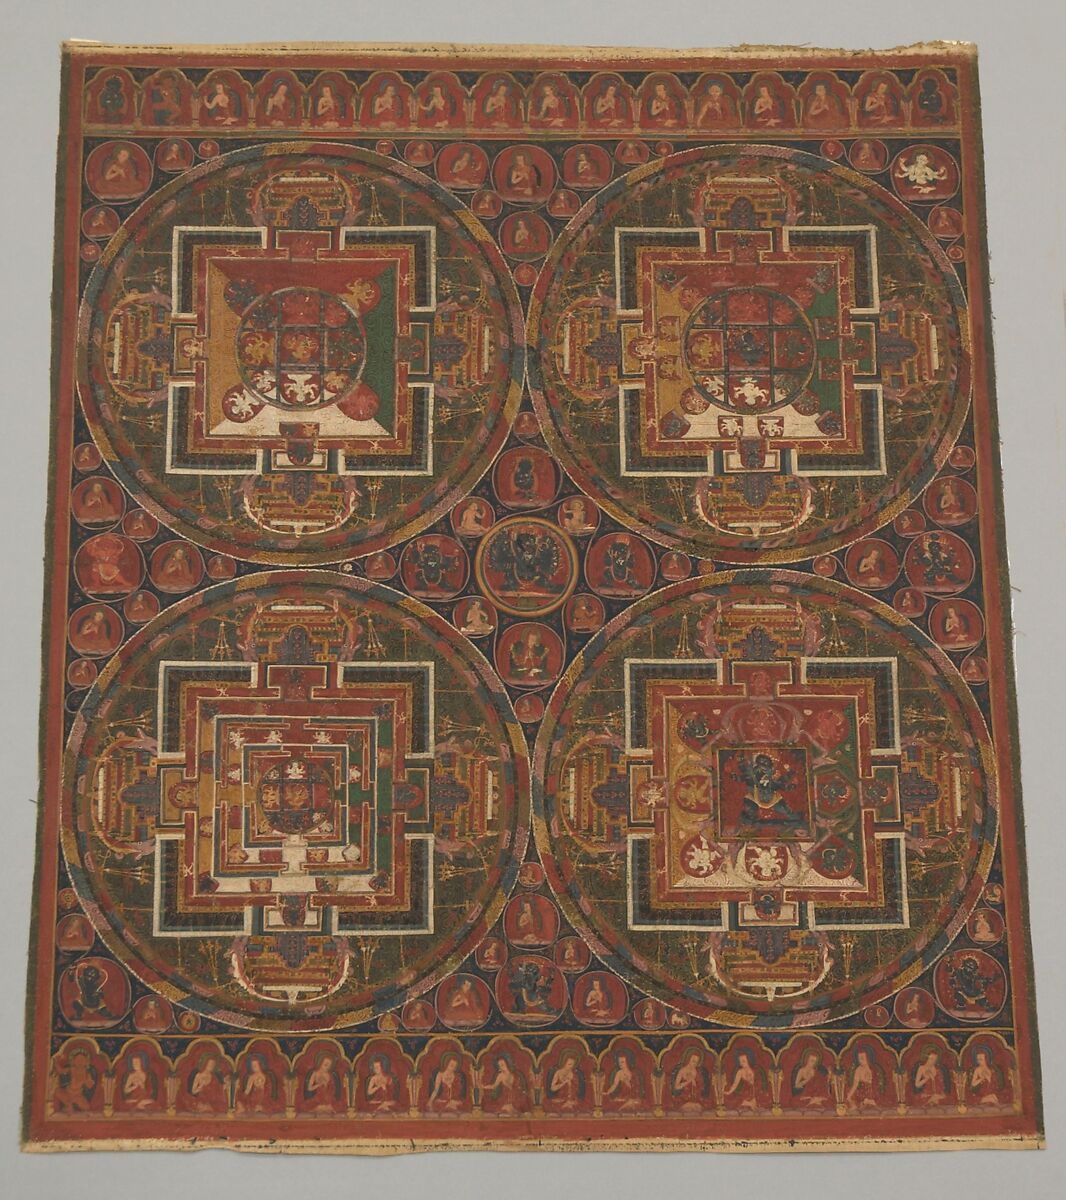 Four Mandalas of the Guhyasamaja Cycle, Distemper and ink on cloth, Tibet 